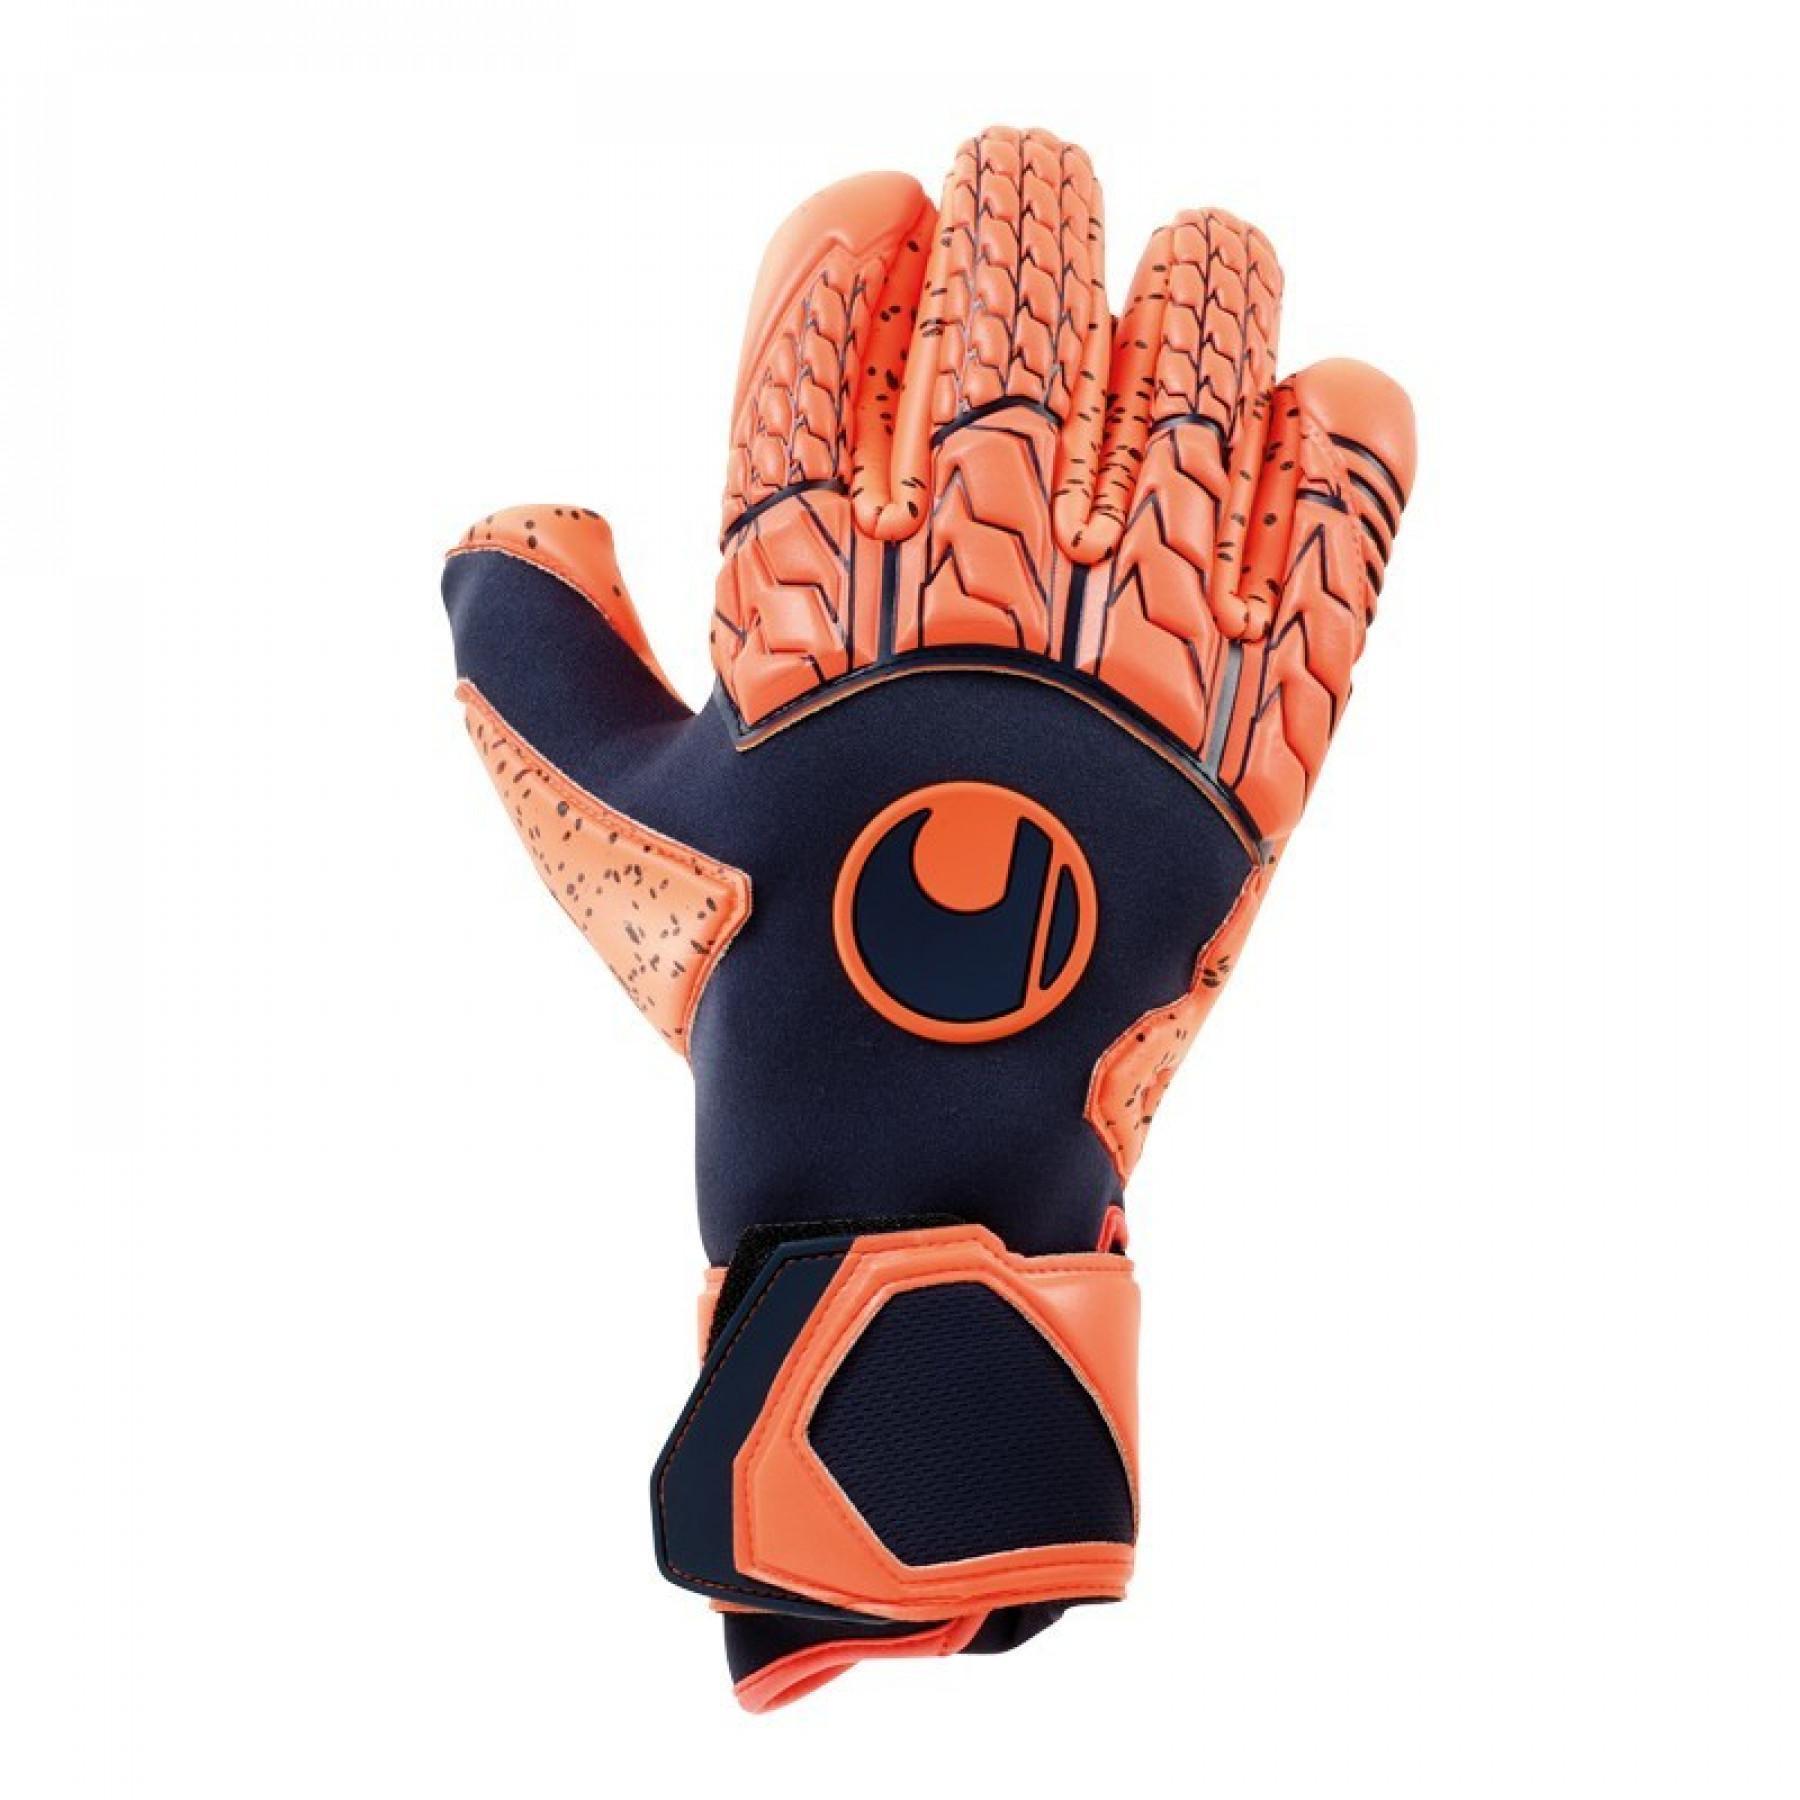 Goalkeeper gloves Uhlsport Next level supergrip finger surround